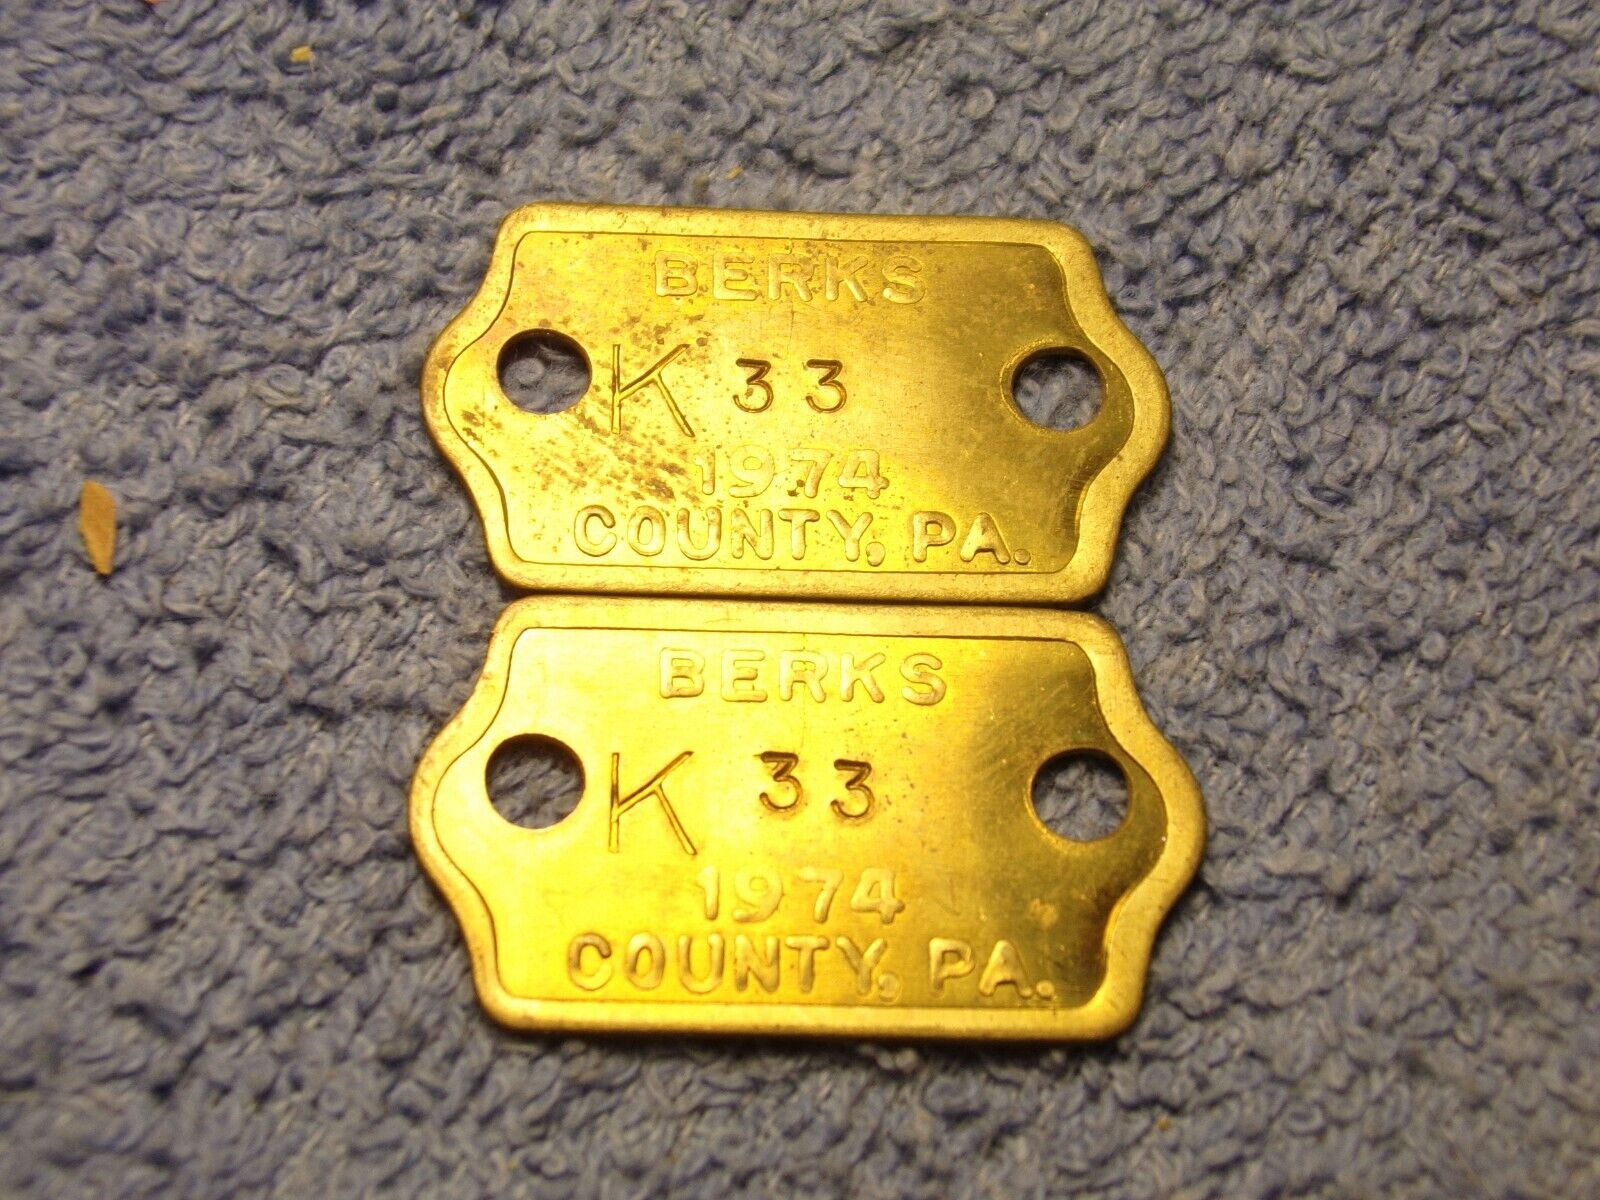 2 Vintage 1974 Berks Co. Pa., Brass Dog Tag Tax License #K33